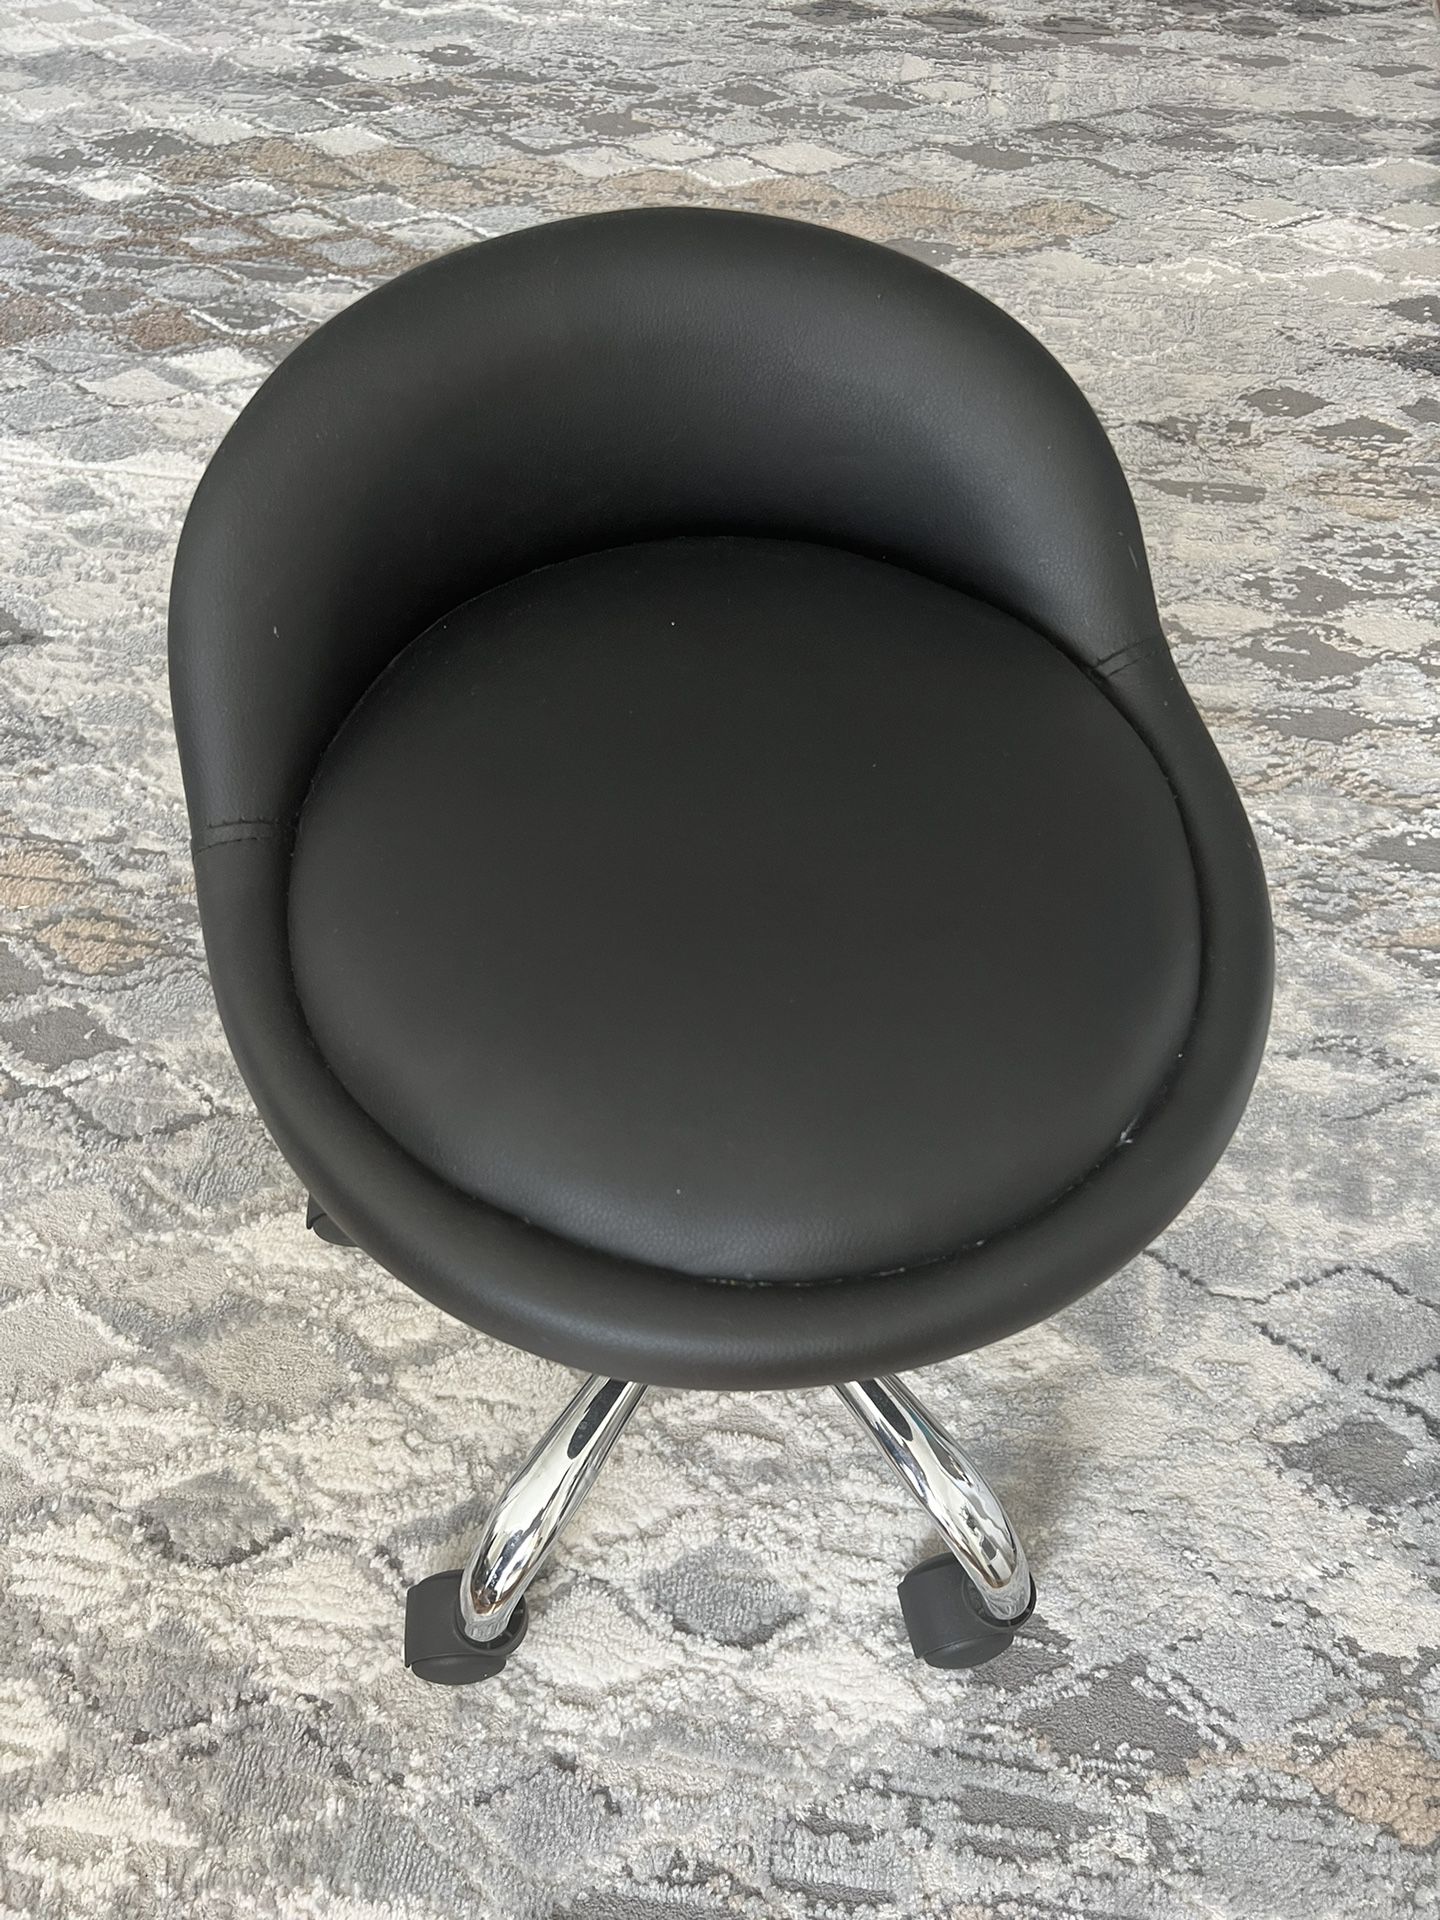 Adjustable Height Hydraulic Rolling Swivel Salon Stool Chair  with Backrest Wheels, Black